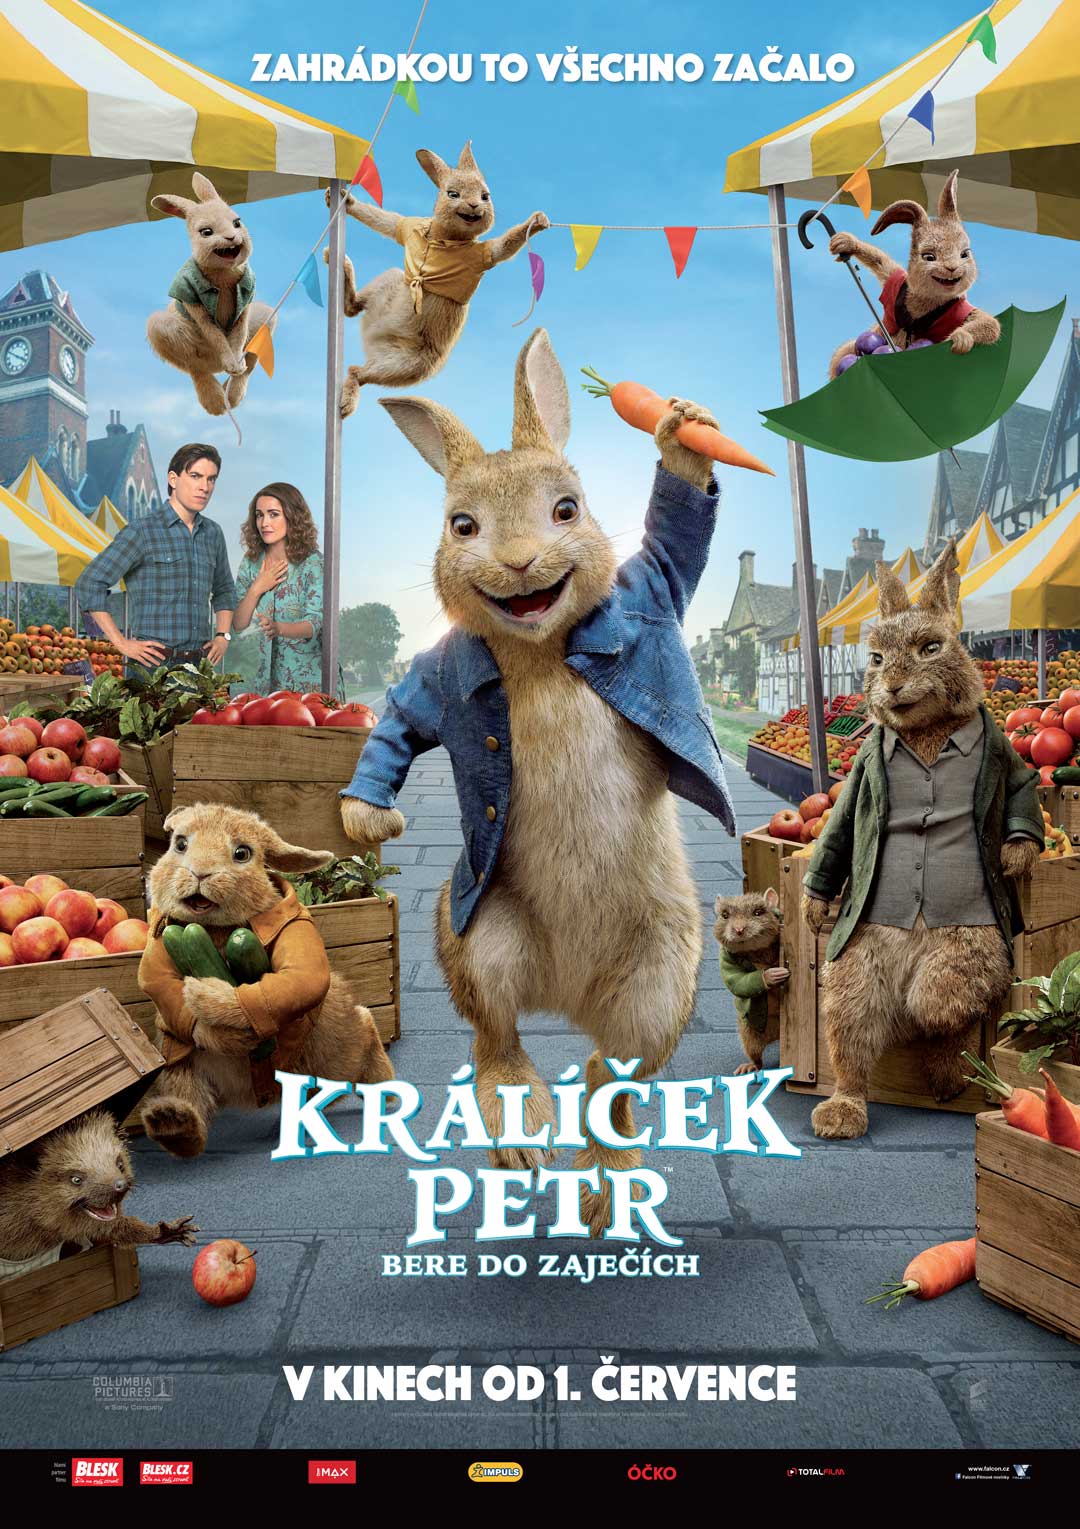 Stiahni si Blu-ray Filmy  Kralicek Petr bere do zajecich / Peter Rabbit 2: The Runaway (2021)(CZ/SK/EN)[1080p] = CSFD 56%